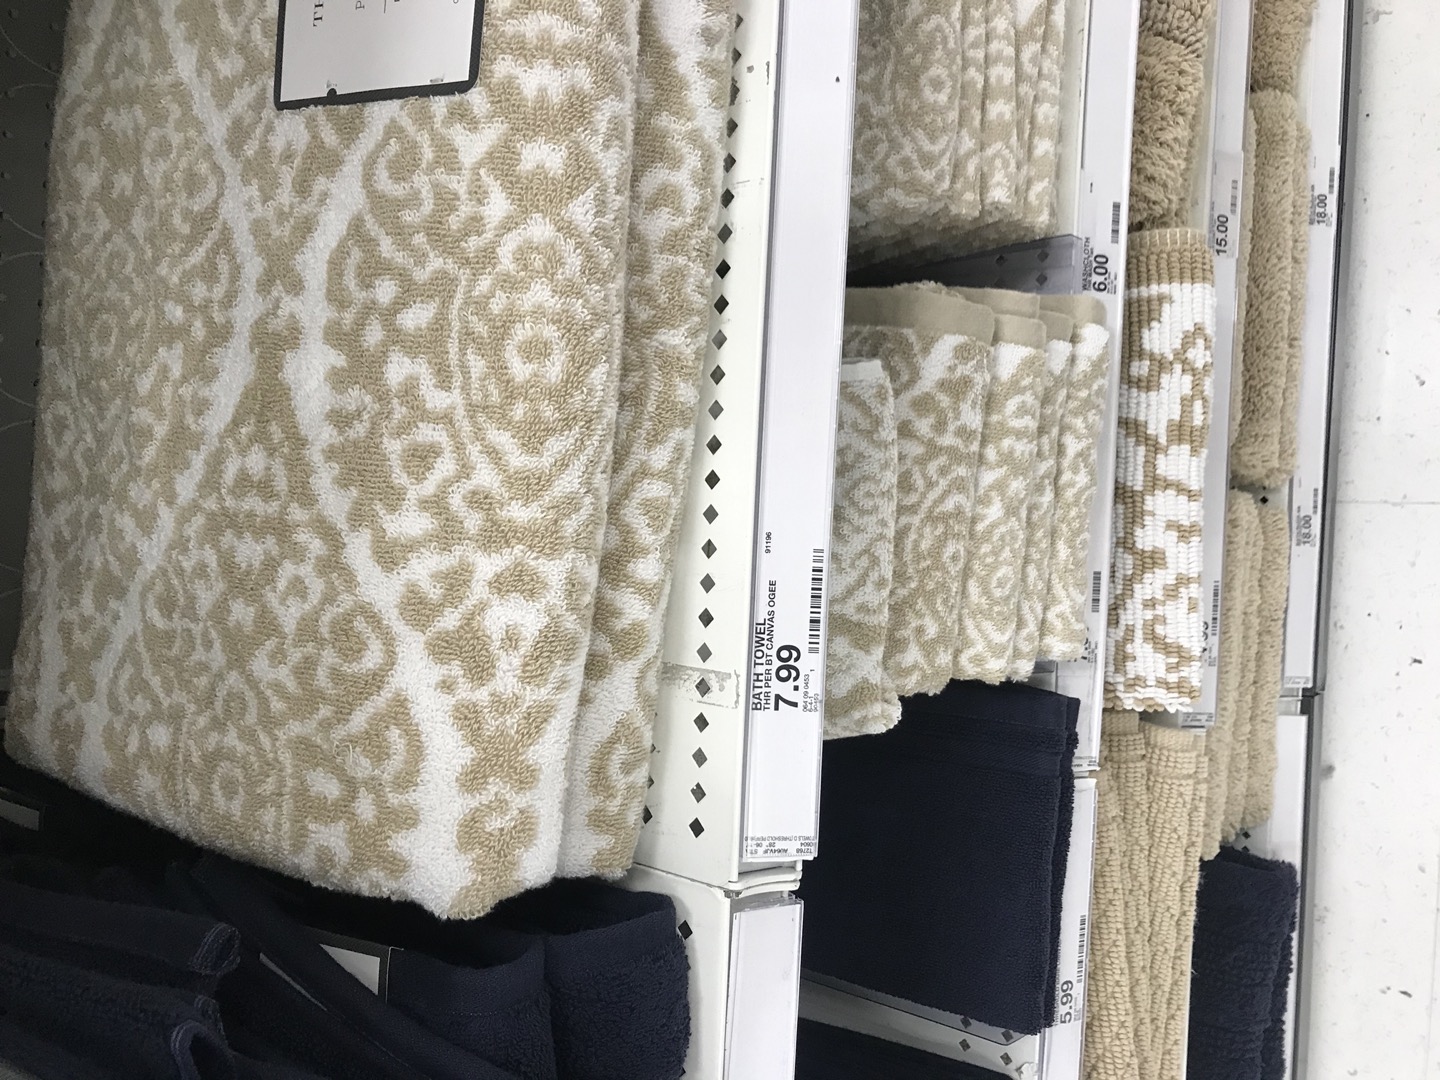 Towel on shelf near price tag